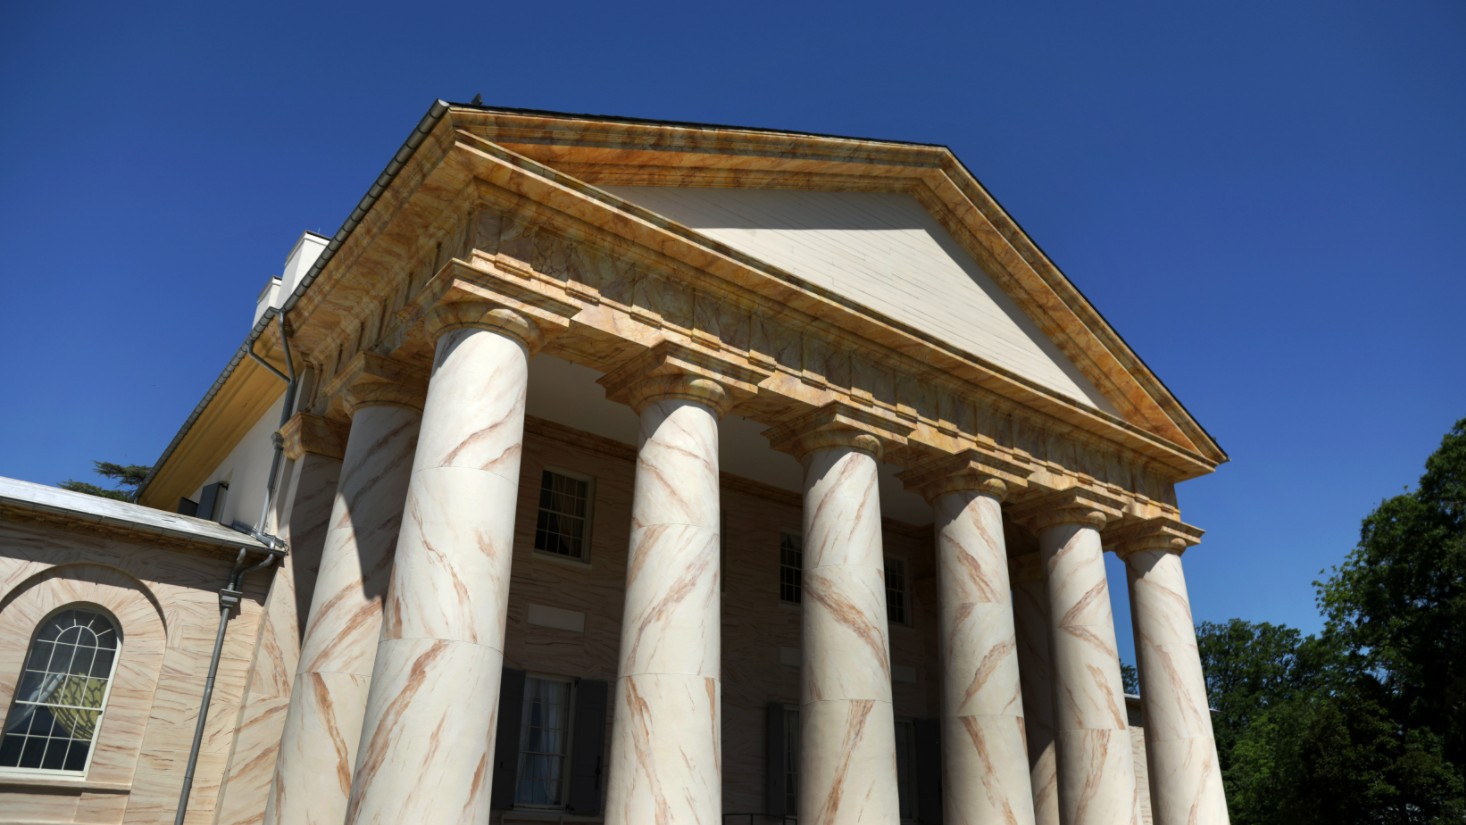 A Look Inside Arlington House, The Robert E. Lee Memorial – NBC4 Washington